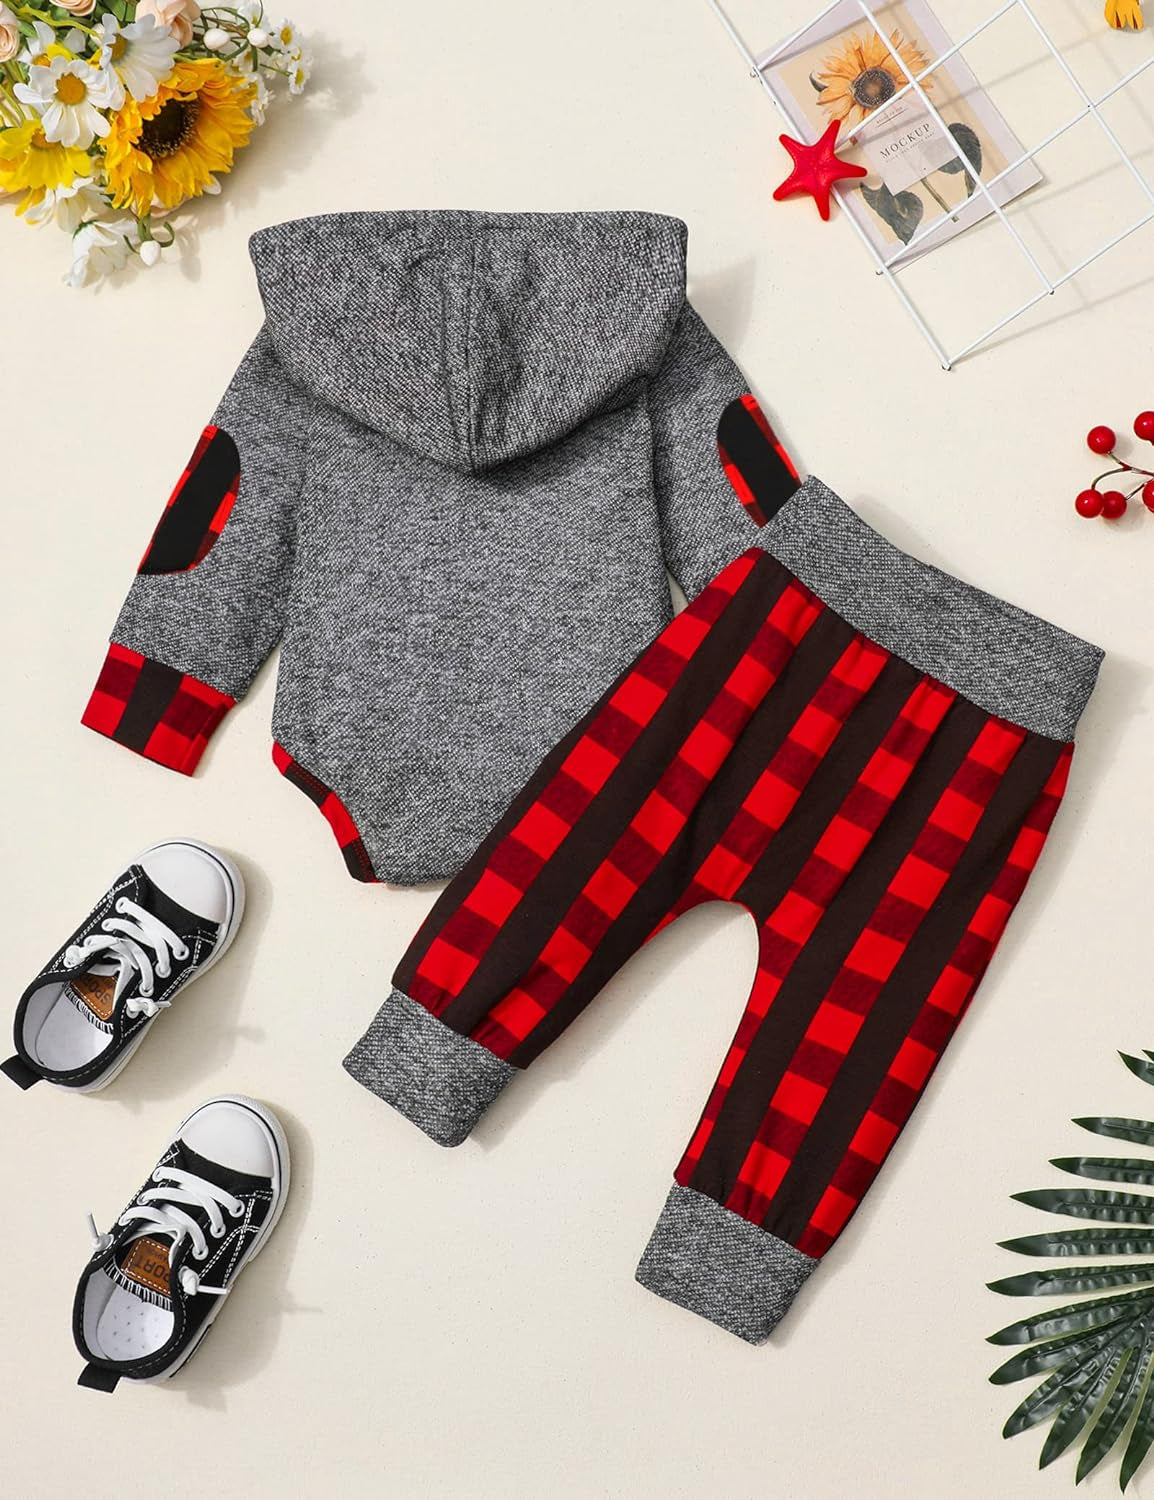 Newborn Baby Boy Clothes Plaid Letter Print Long Sleeve Hoodies + Long Pants 2PCS Fall Winter Outfits Set